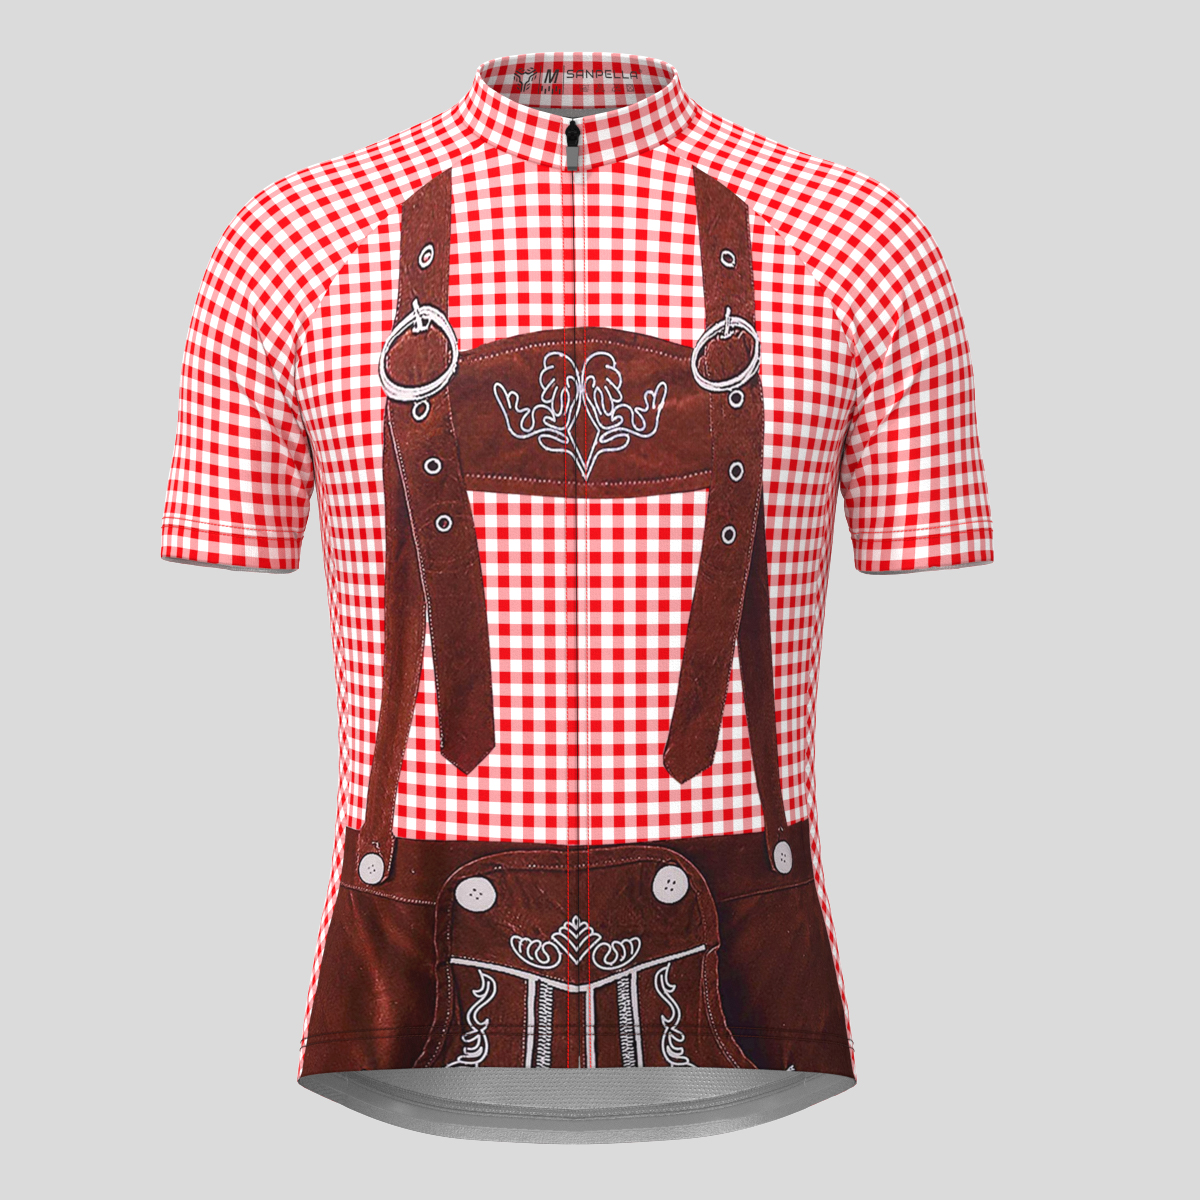 Oktoberfest Costume Men's Cycling Jersey - Red